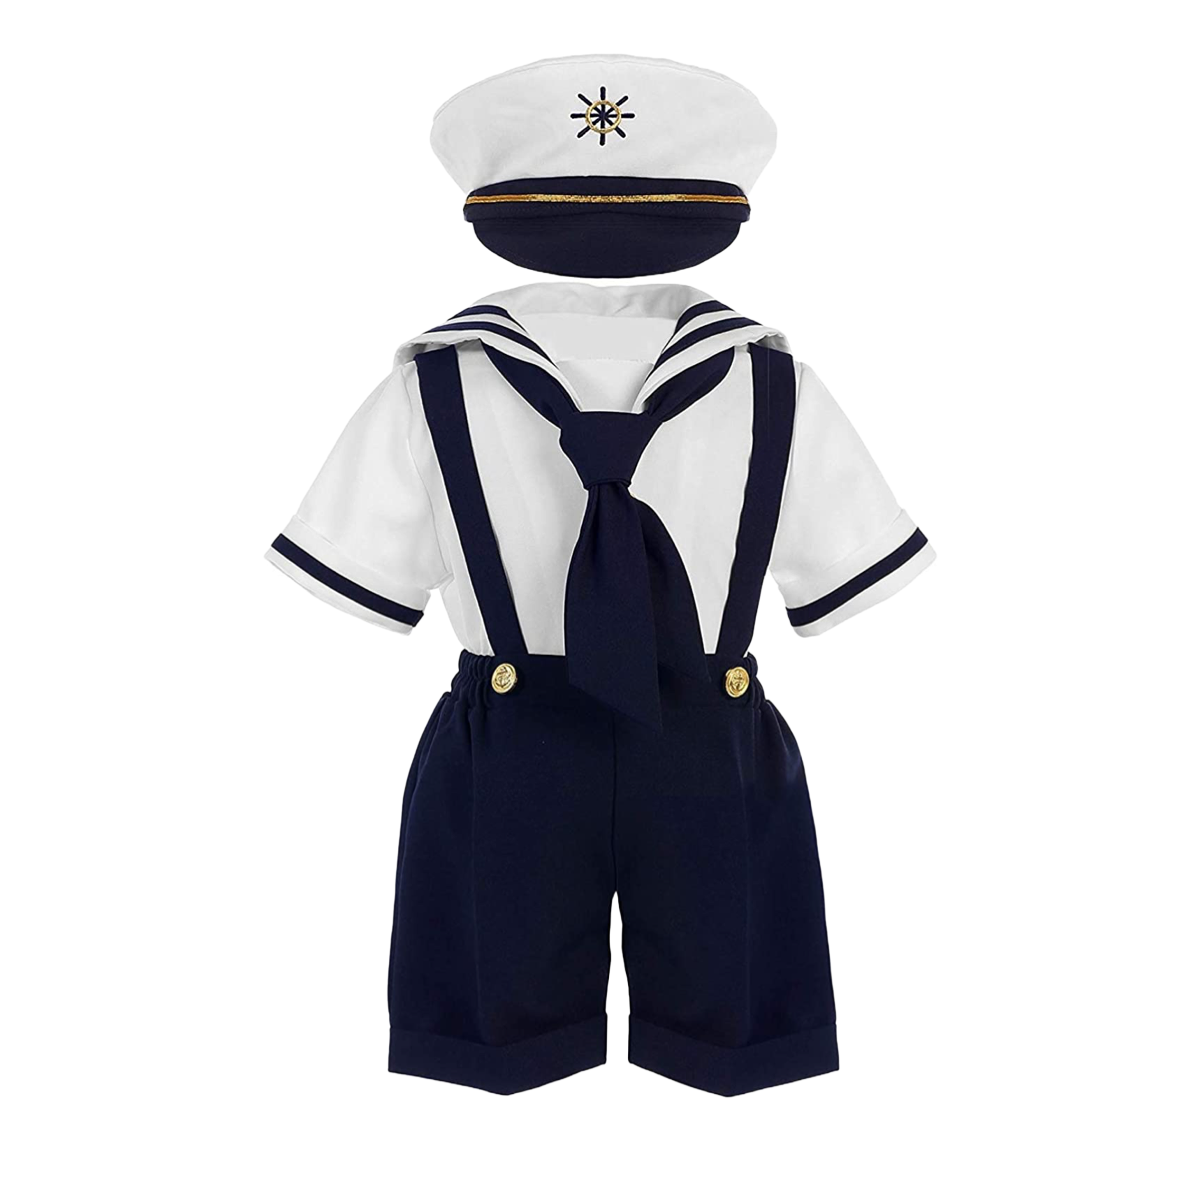 Boys Sailor Outfit w/ Hat